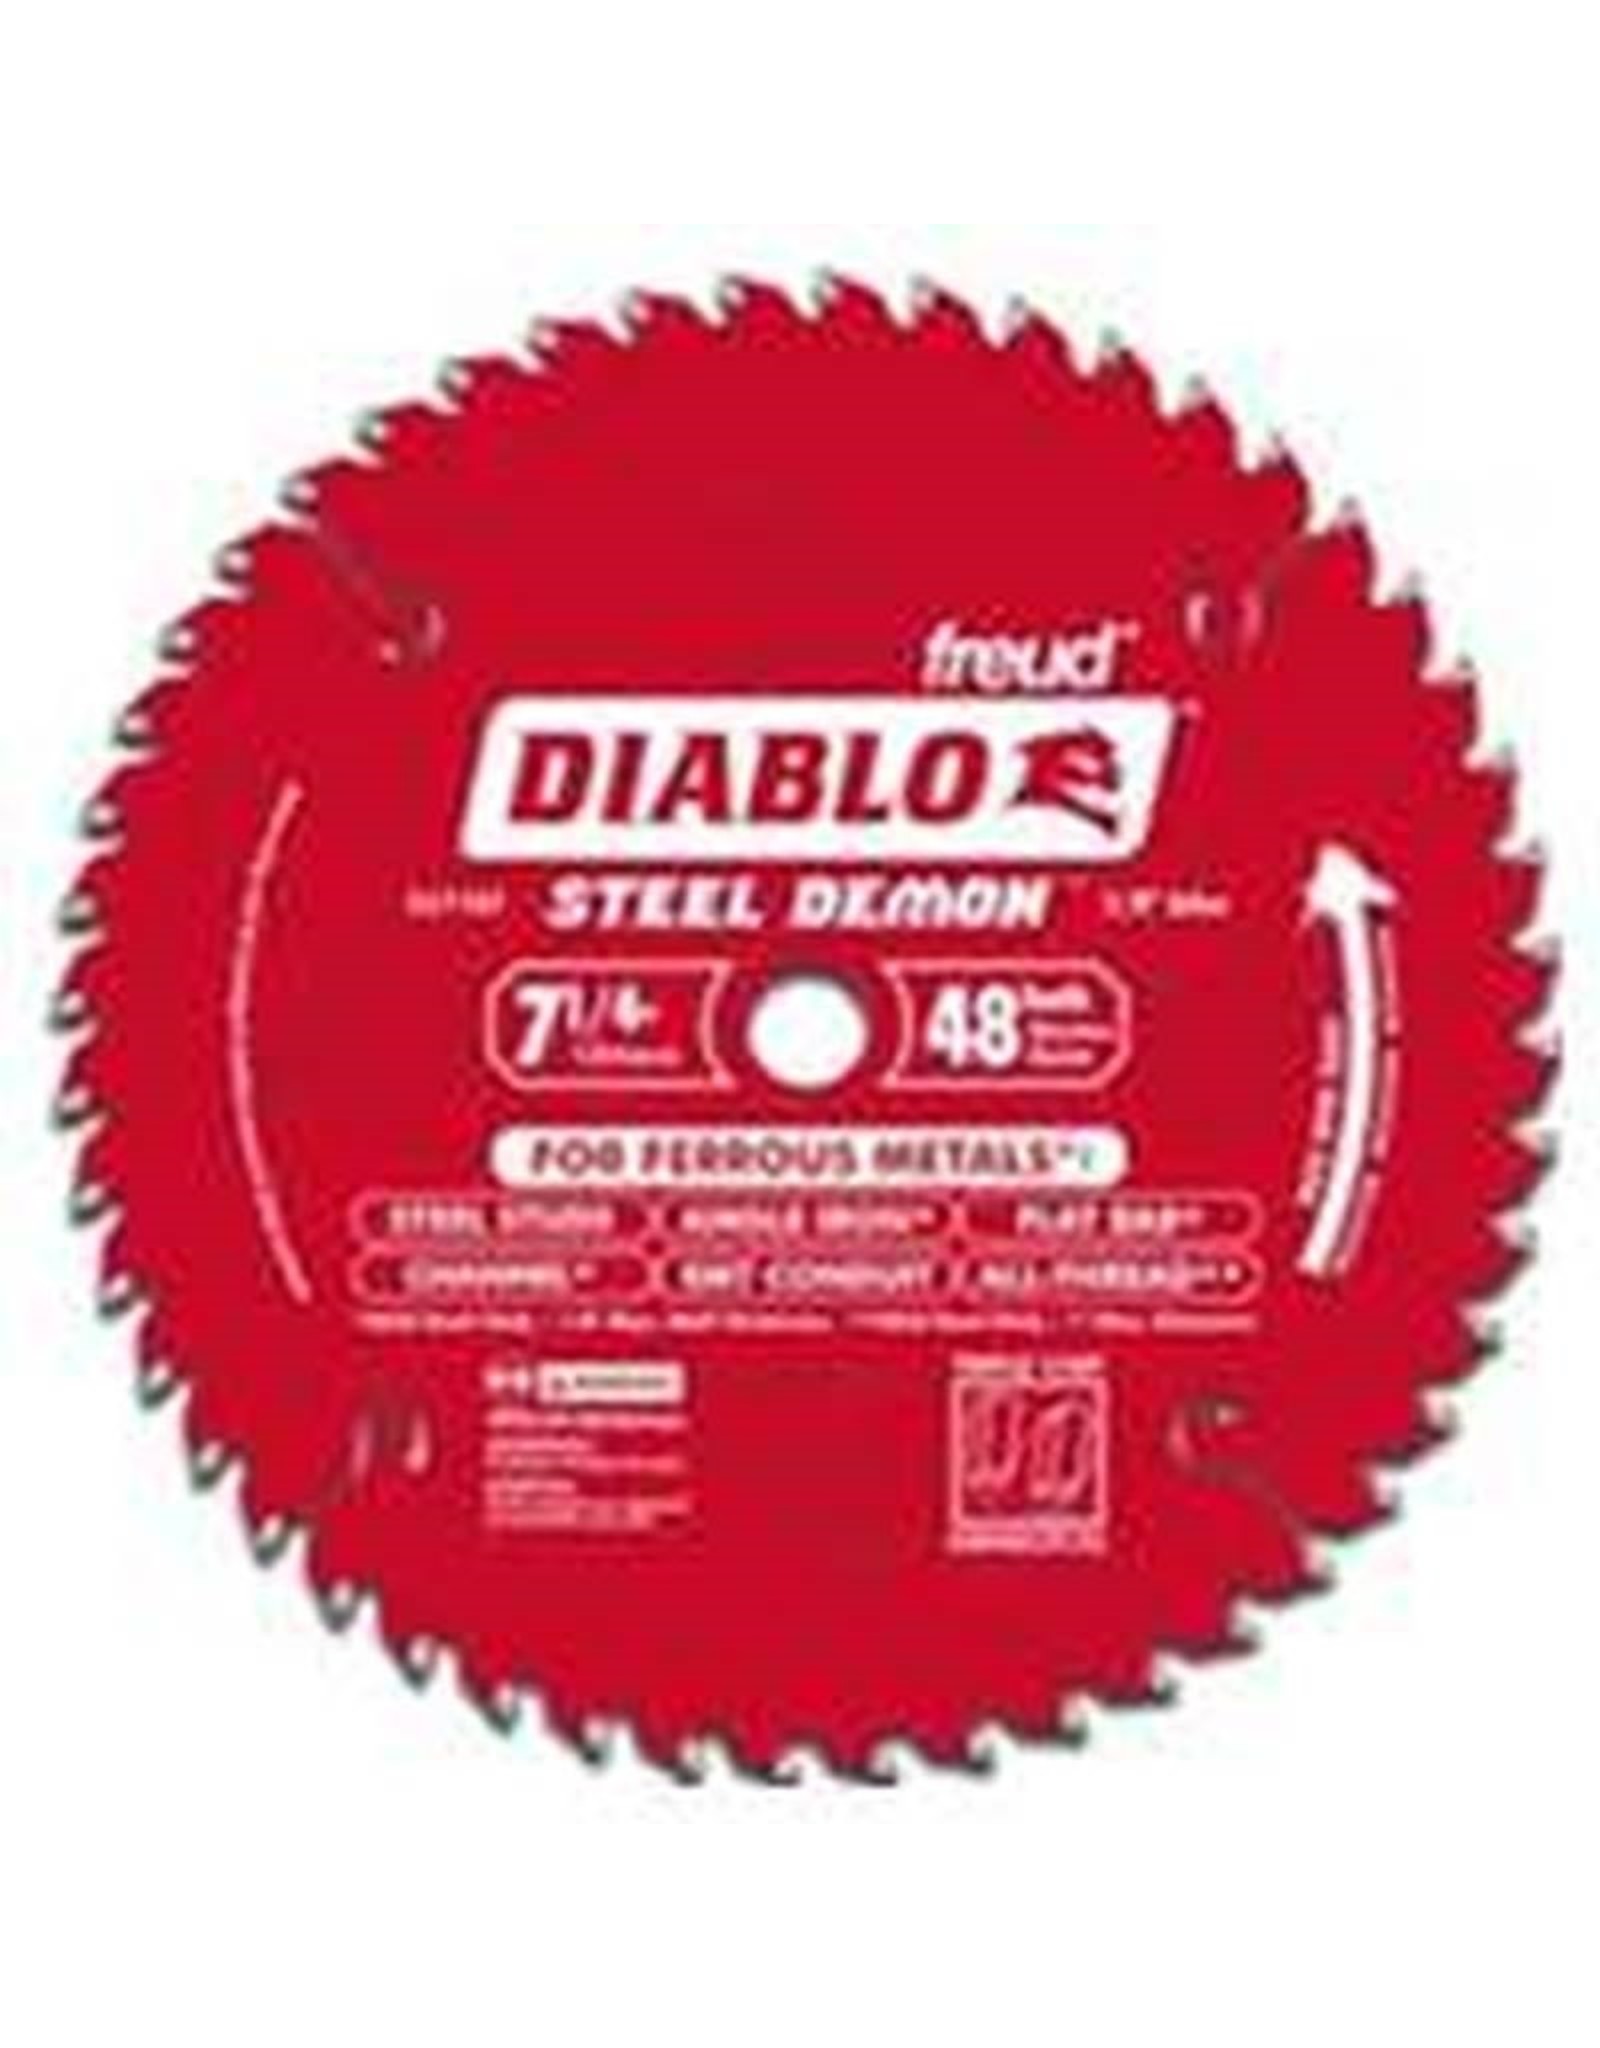 Diablo Diablo Steel Demon D0748CFA Circular Saw Blade, 7-1/4 in Dia, 5/8 in Arbor, 48-Teeth, Cermet Cutting Edge